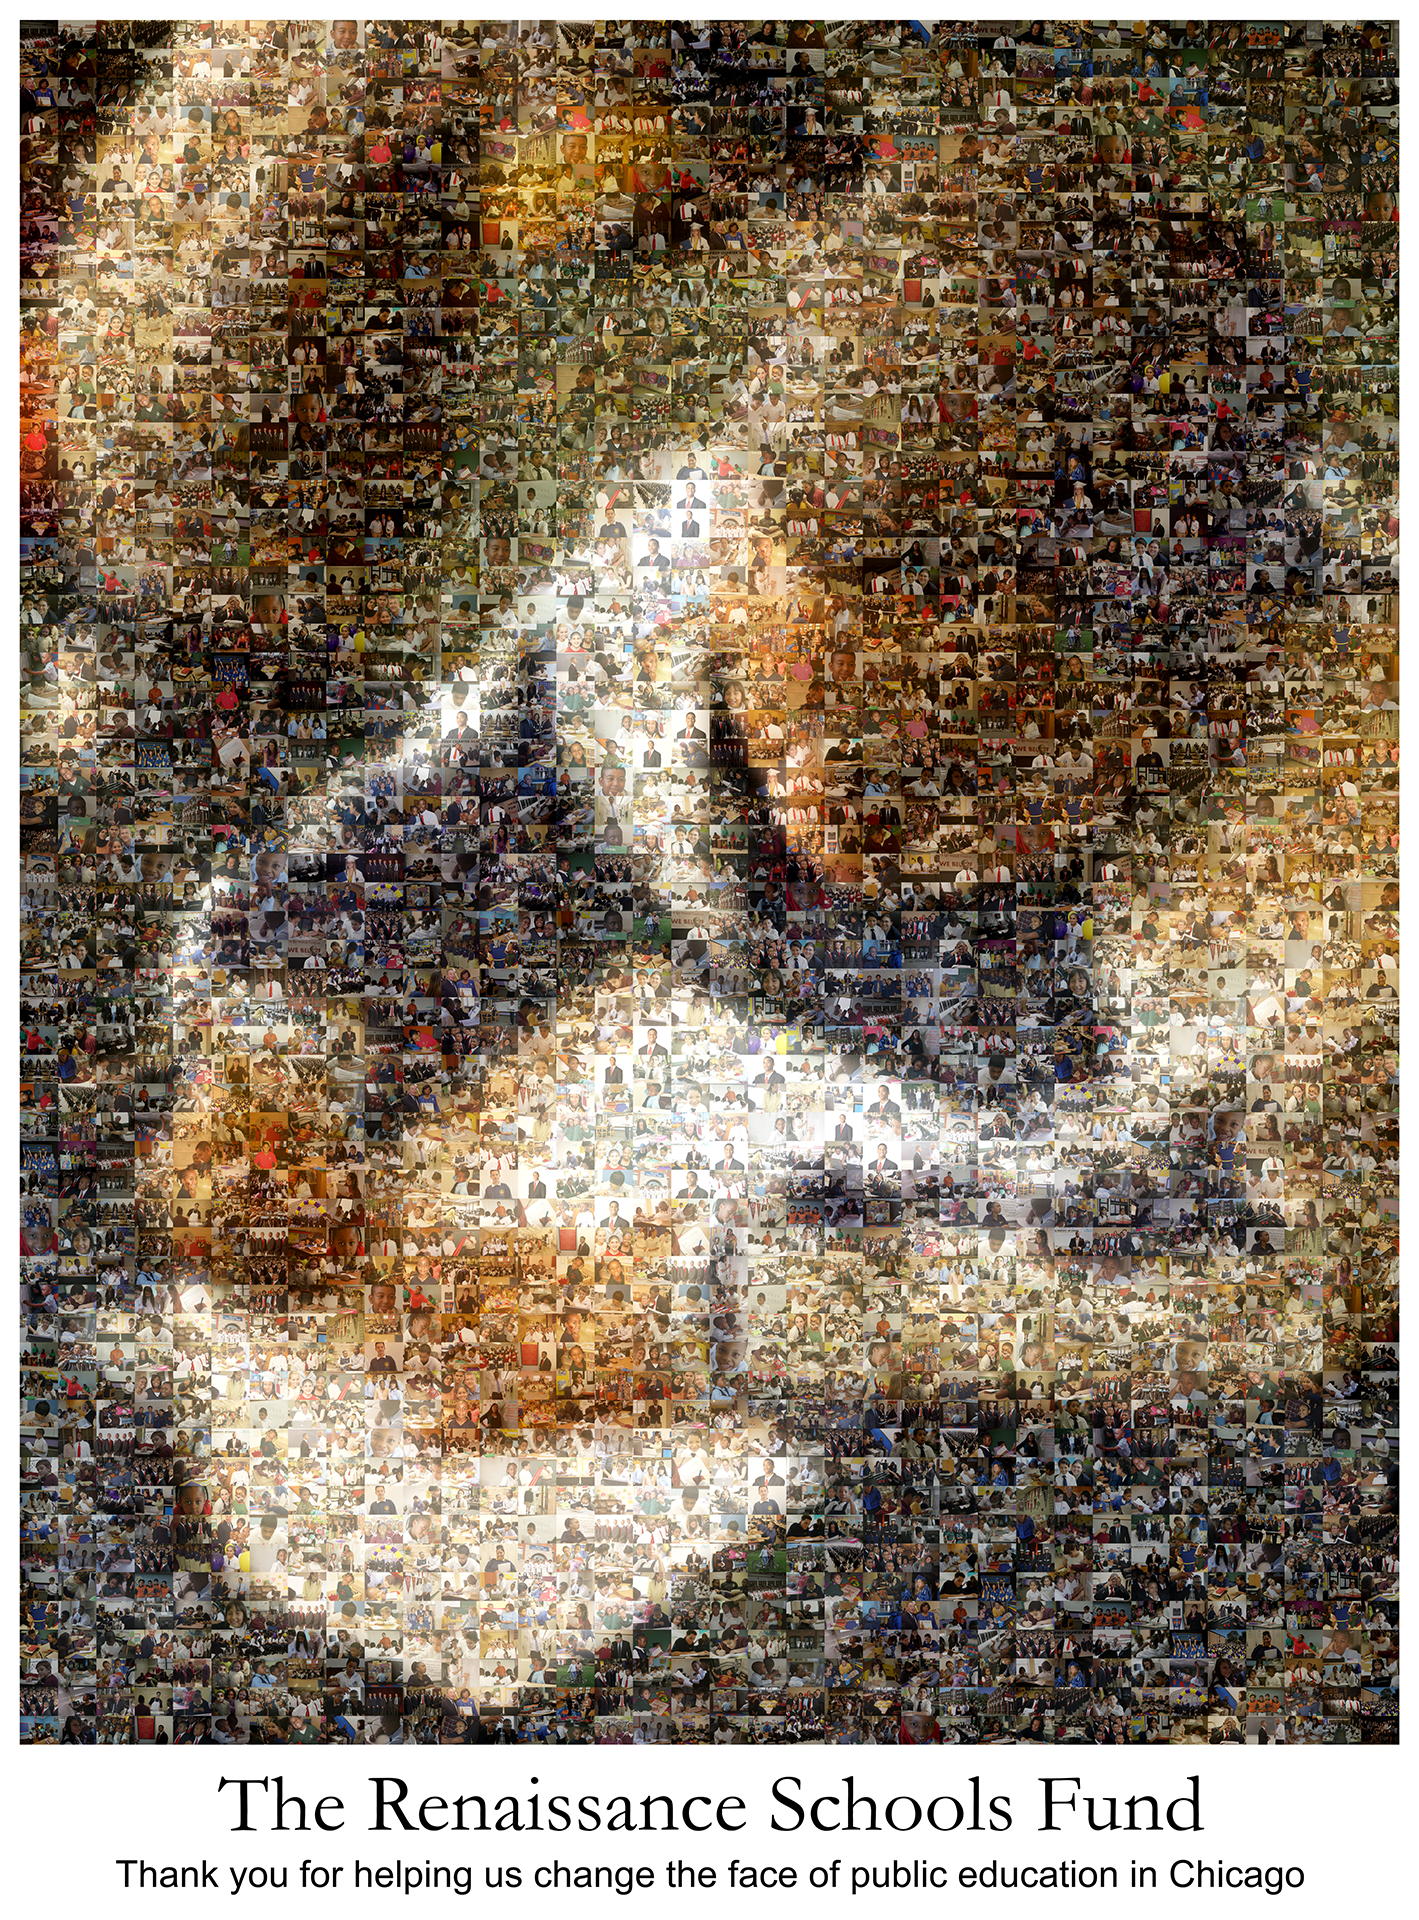 photo mosaic created using 365 customer selected photos